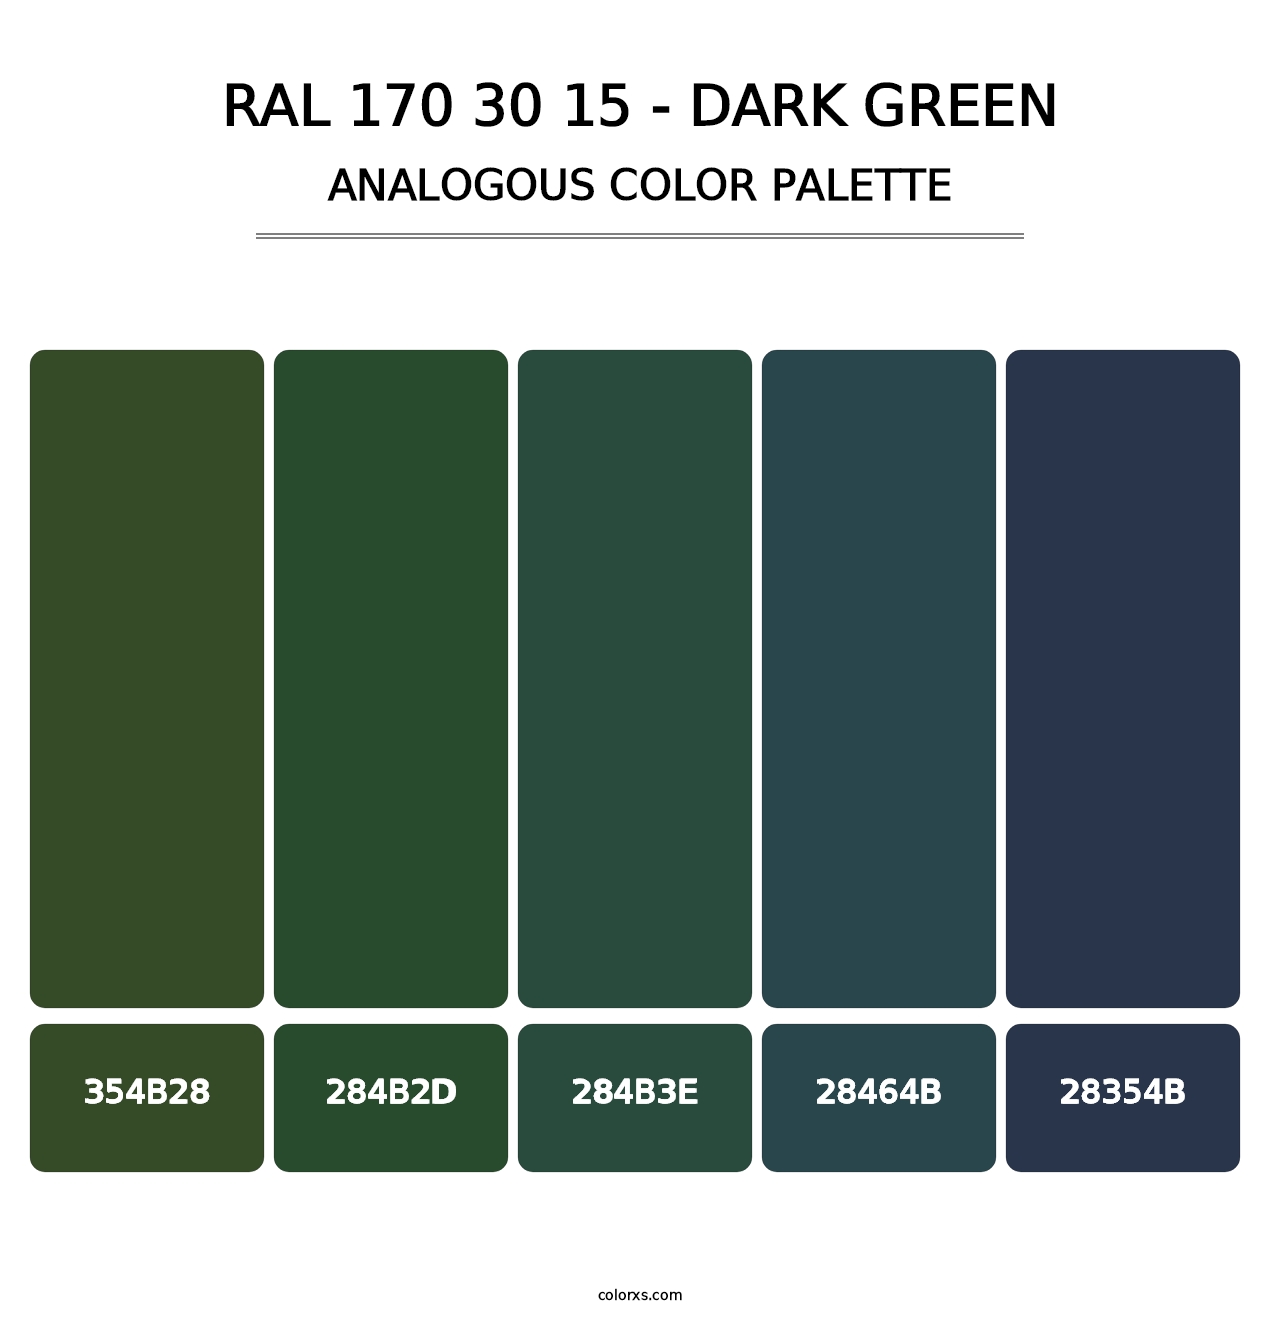 RAL 170 30 15 - Dark Green - Analogous Color Palette